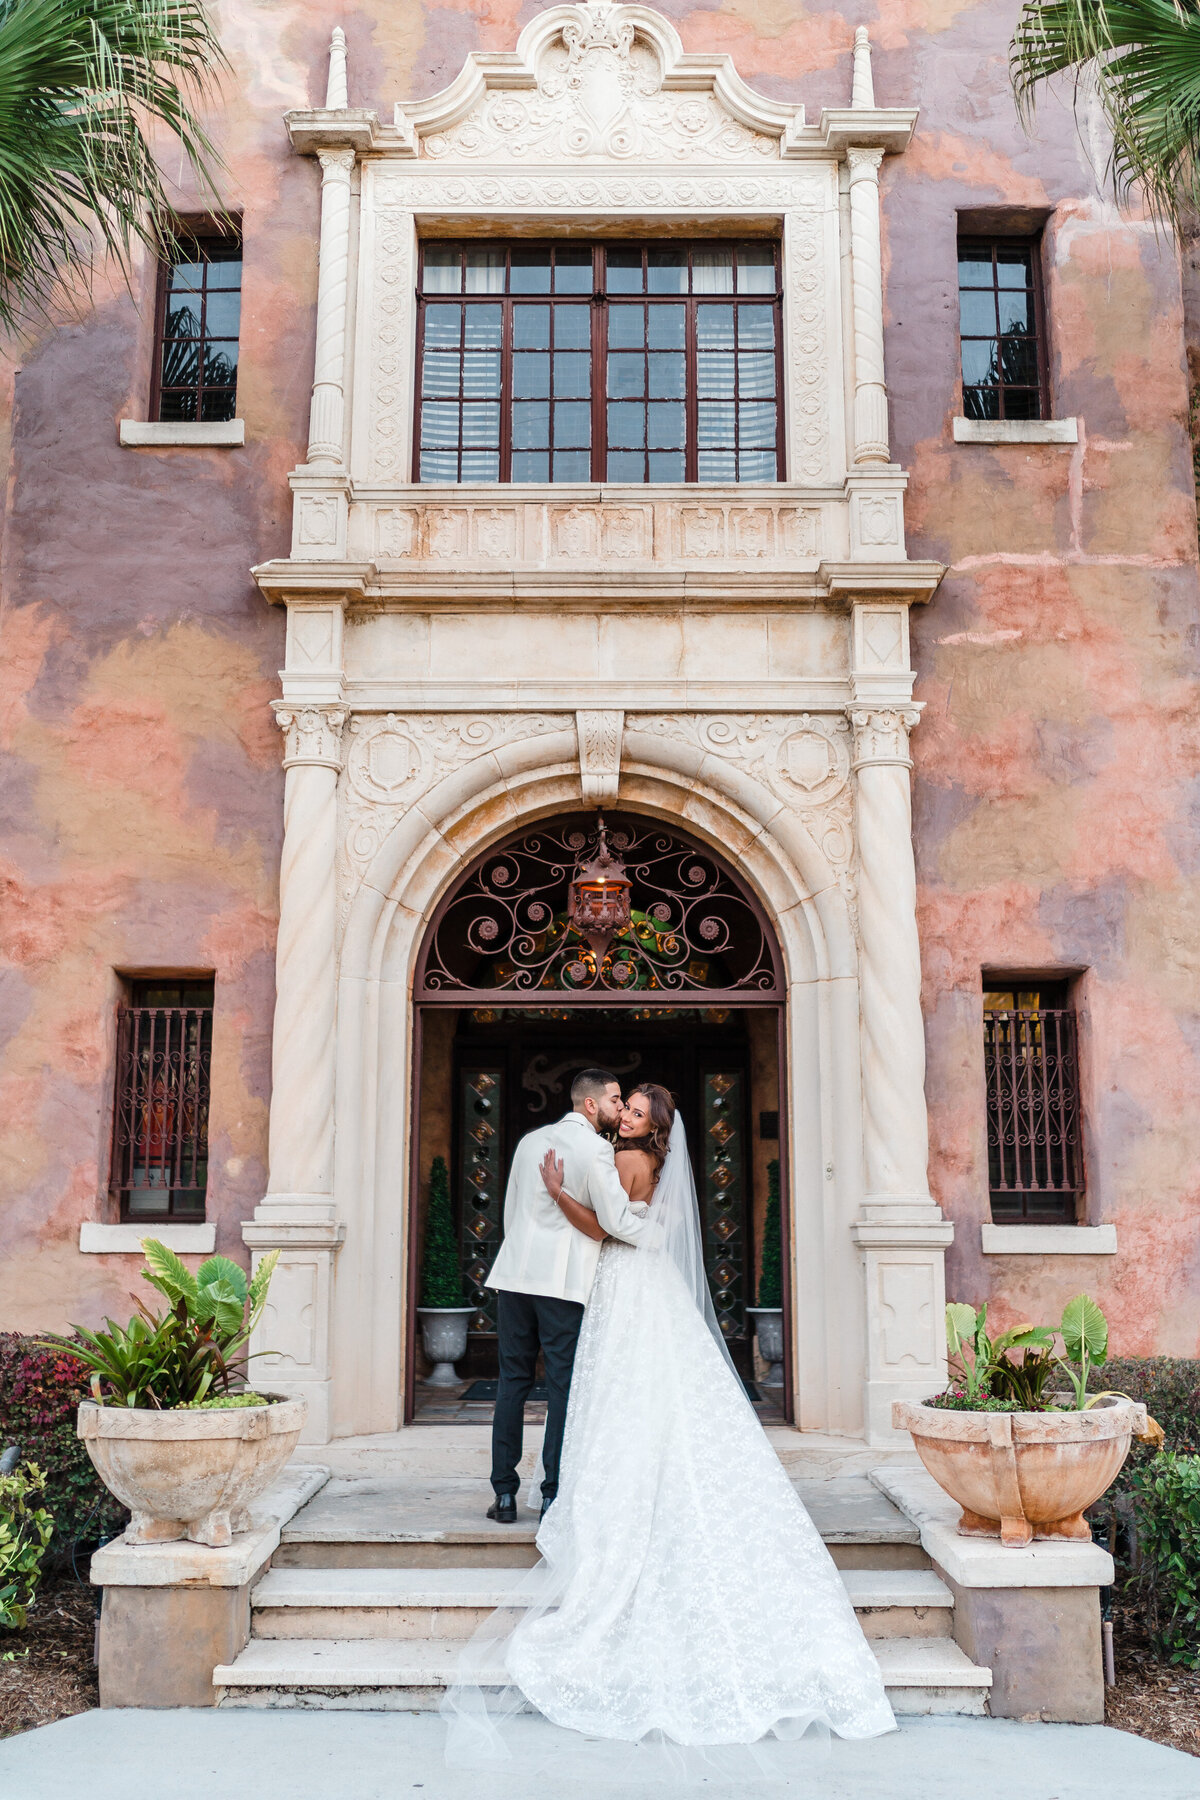 Romantic wedding photography at Howey Mansion in Orlando Florida